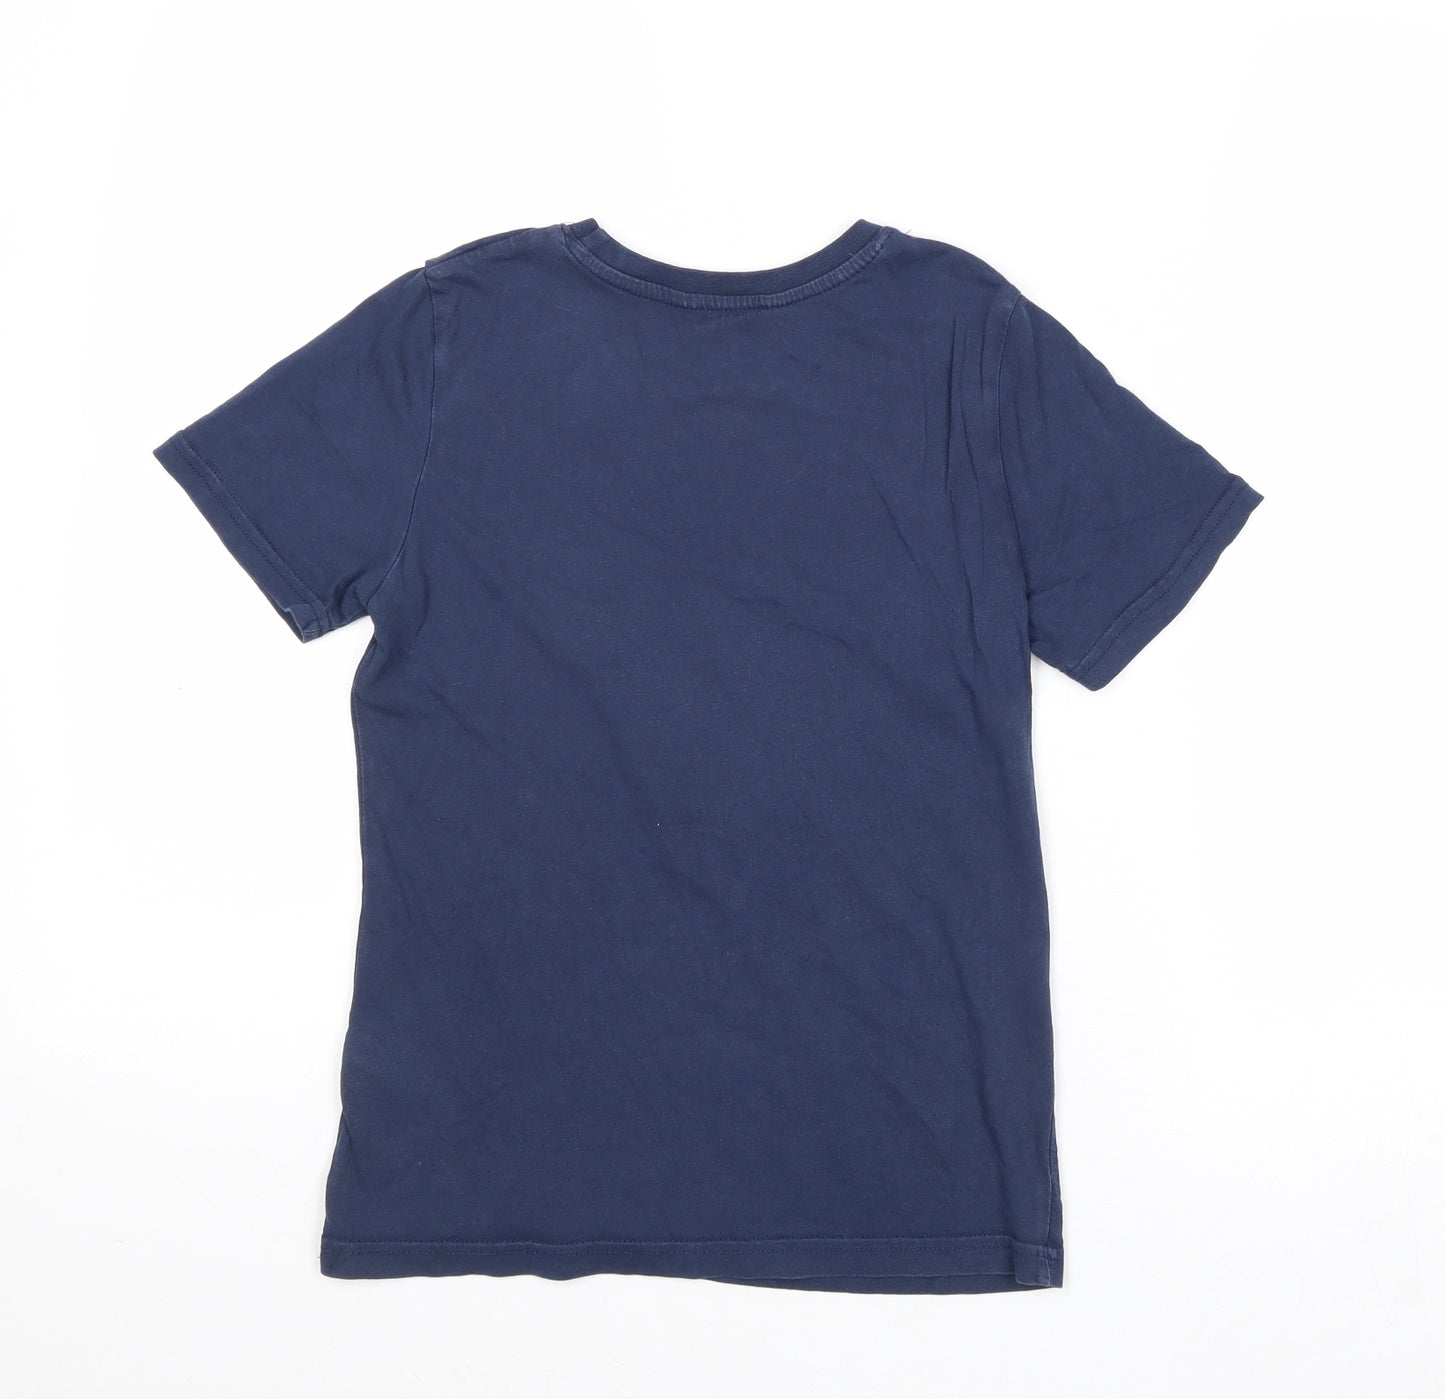 H&M Boys Blue Cotton Basic T-Shirt Size 9-10 Years Round Neck Pullover - Zanzibar Tigers